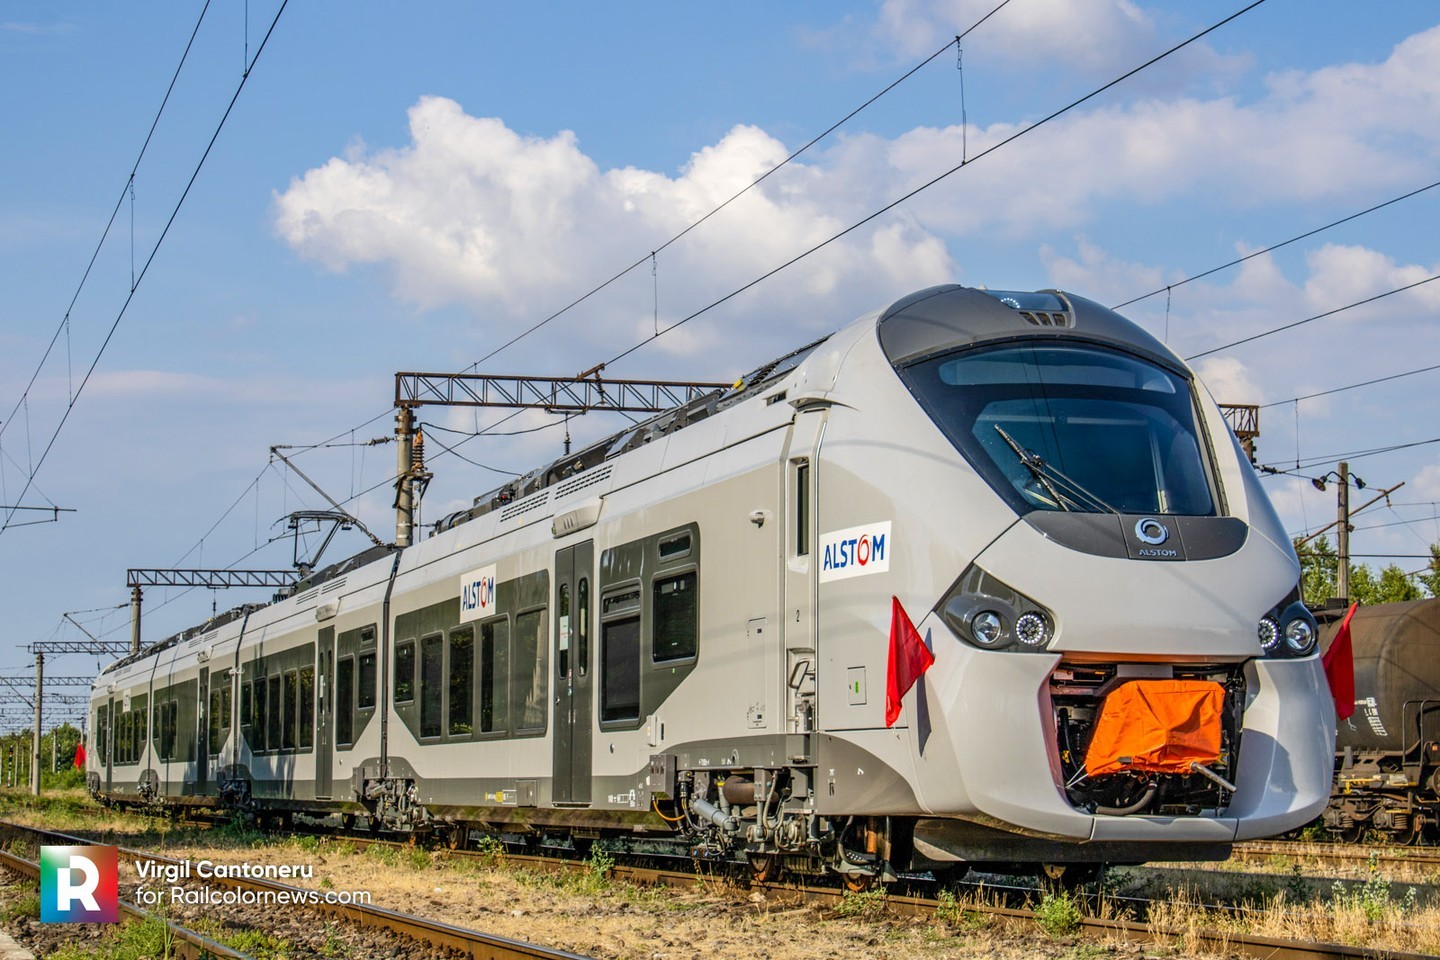 📷 by Virgil Cantoneru 🇷🇴 The Hybrid Coradia Polyvalent re-emerges in Romania ⬆️ See the gallery on RailcolorNews.com 👍
.
.
.
.
.
#Alstom #CoradiaPolyvalent #AlstomCoradiaPolyvalent #CFR #Hybrid #CFRinfrastrure #CoradiaPolyvalenthybrid #trenuri #CăileFerateRomâne #Railways #Railways_of_Romania #railwayphotography #railcolornews #passengertrain #unit #EMU #romaniantrains #instarailway #instatrain #railways_of_our_world #train #feroviar